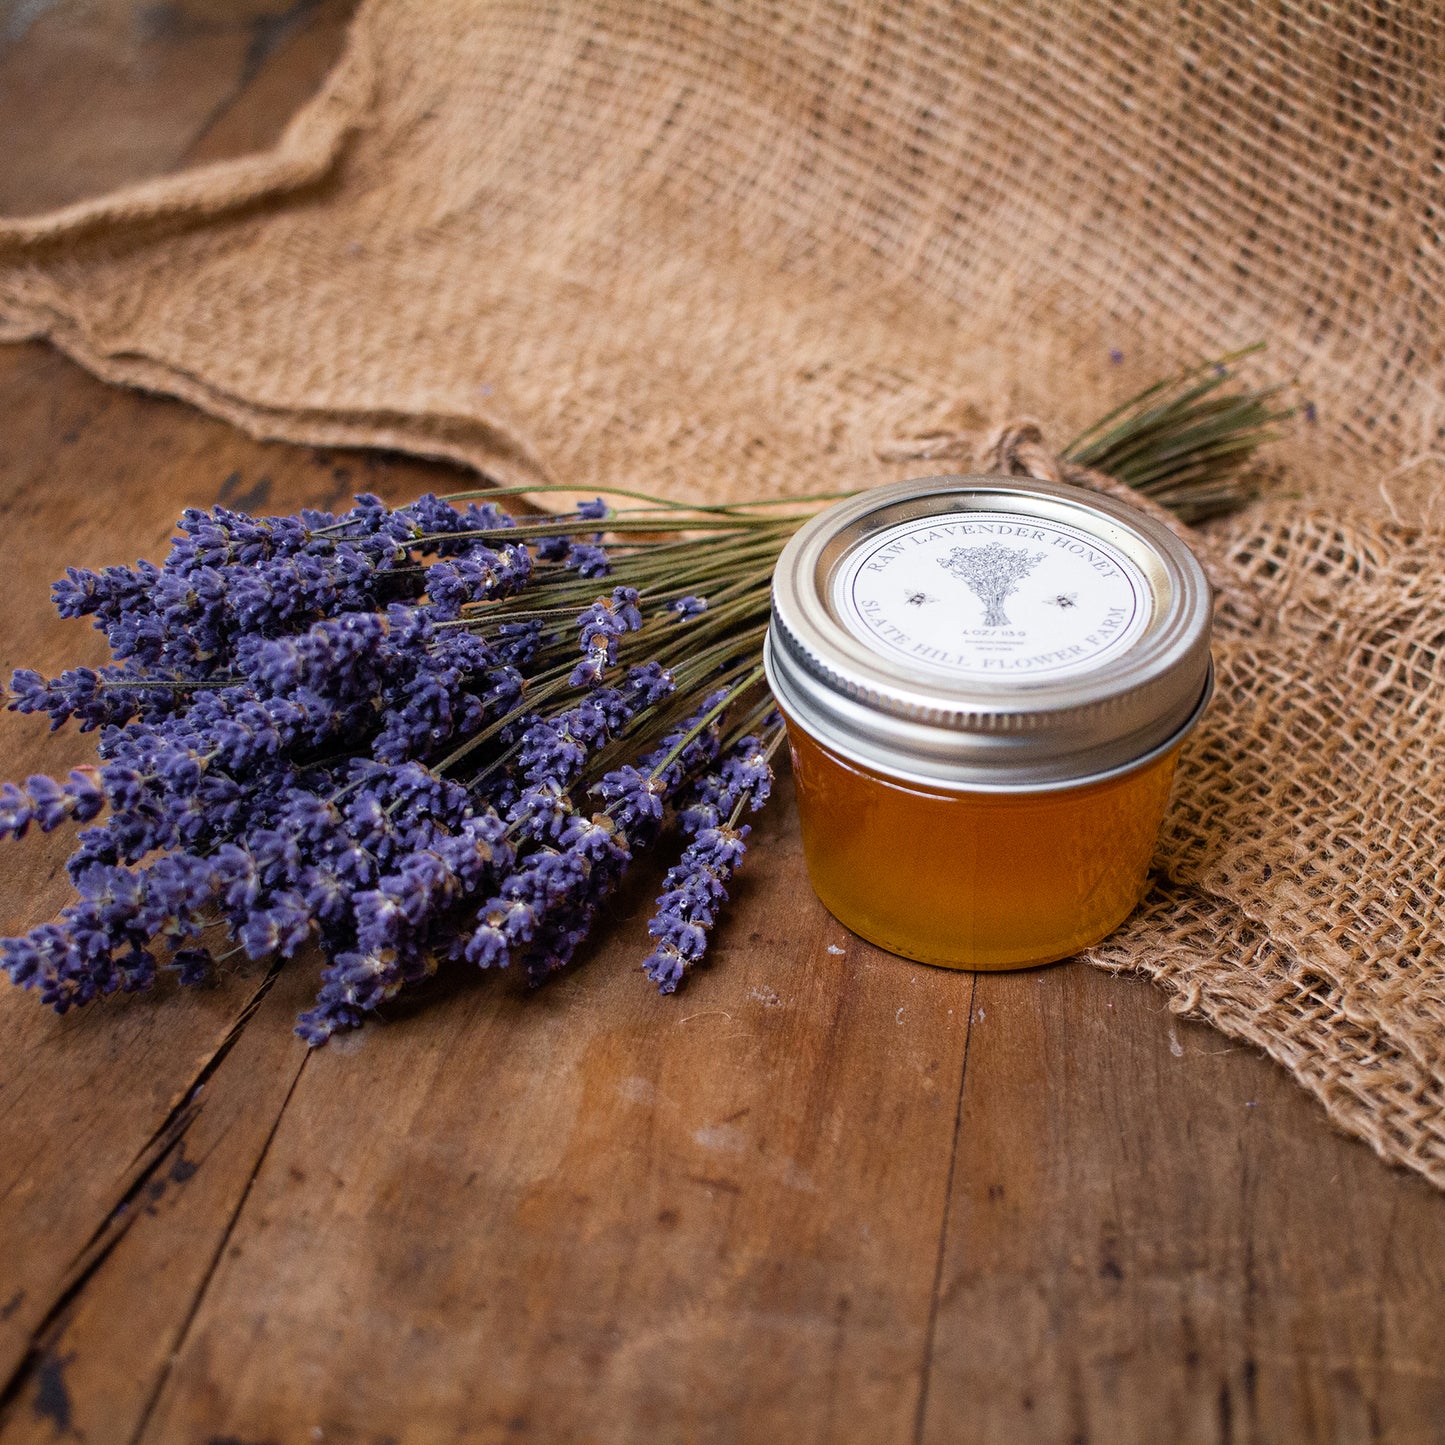 Small glass jar of lavender honey next to a lavender bundle on burlap.